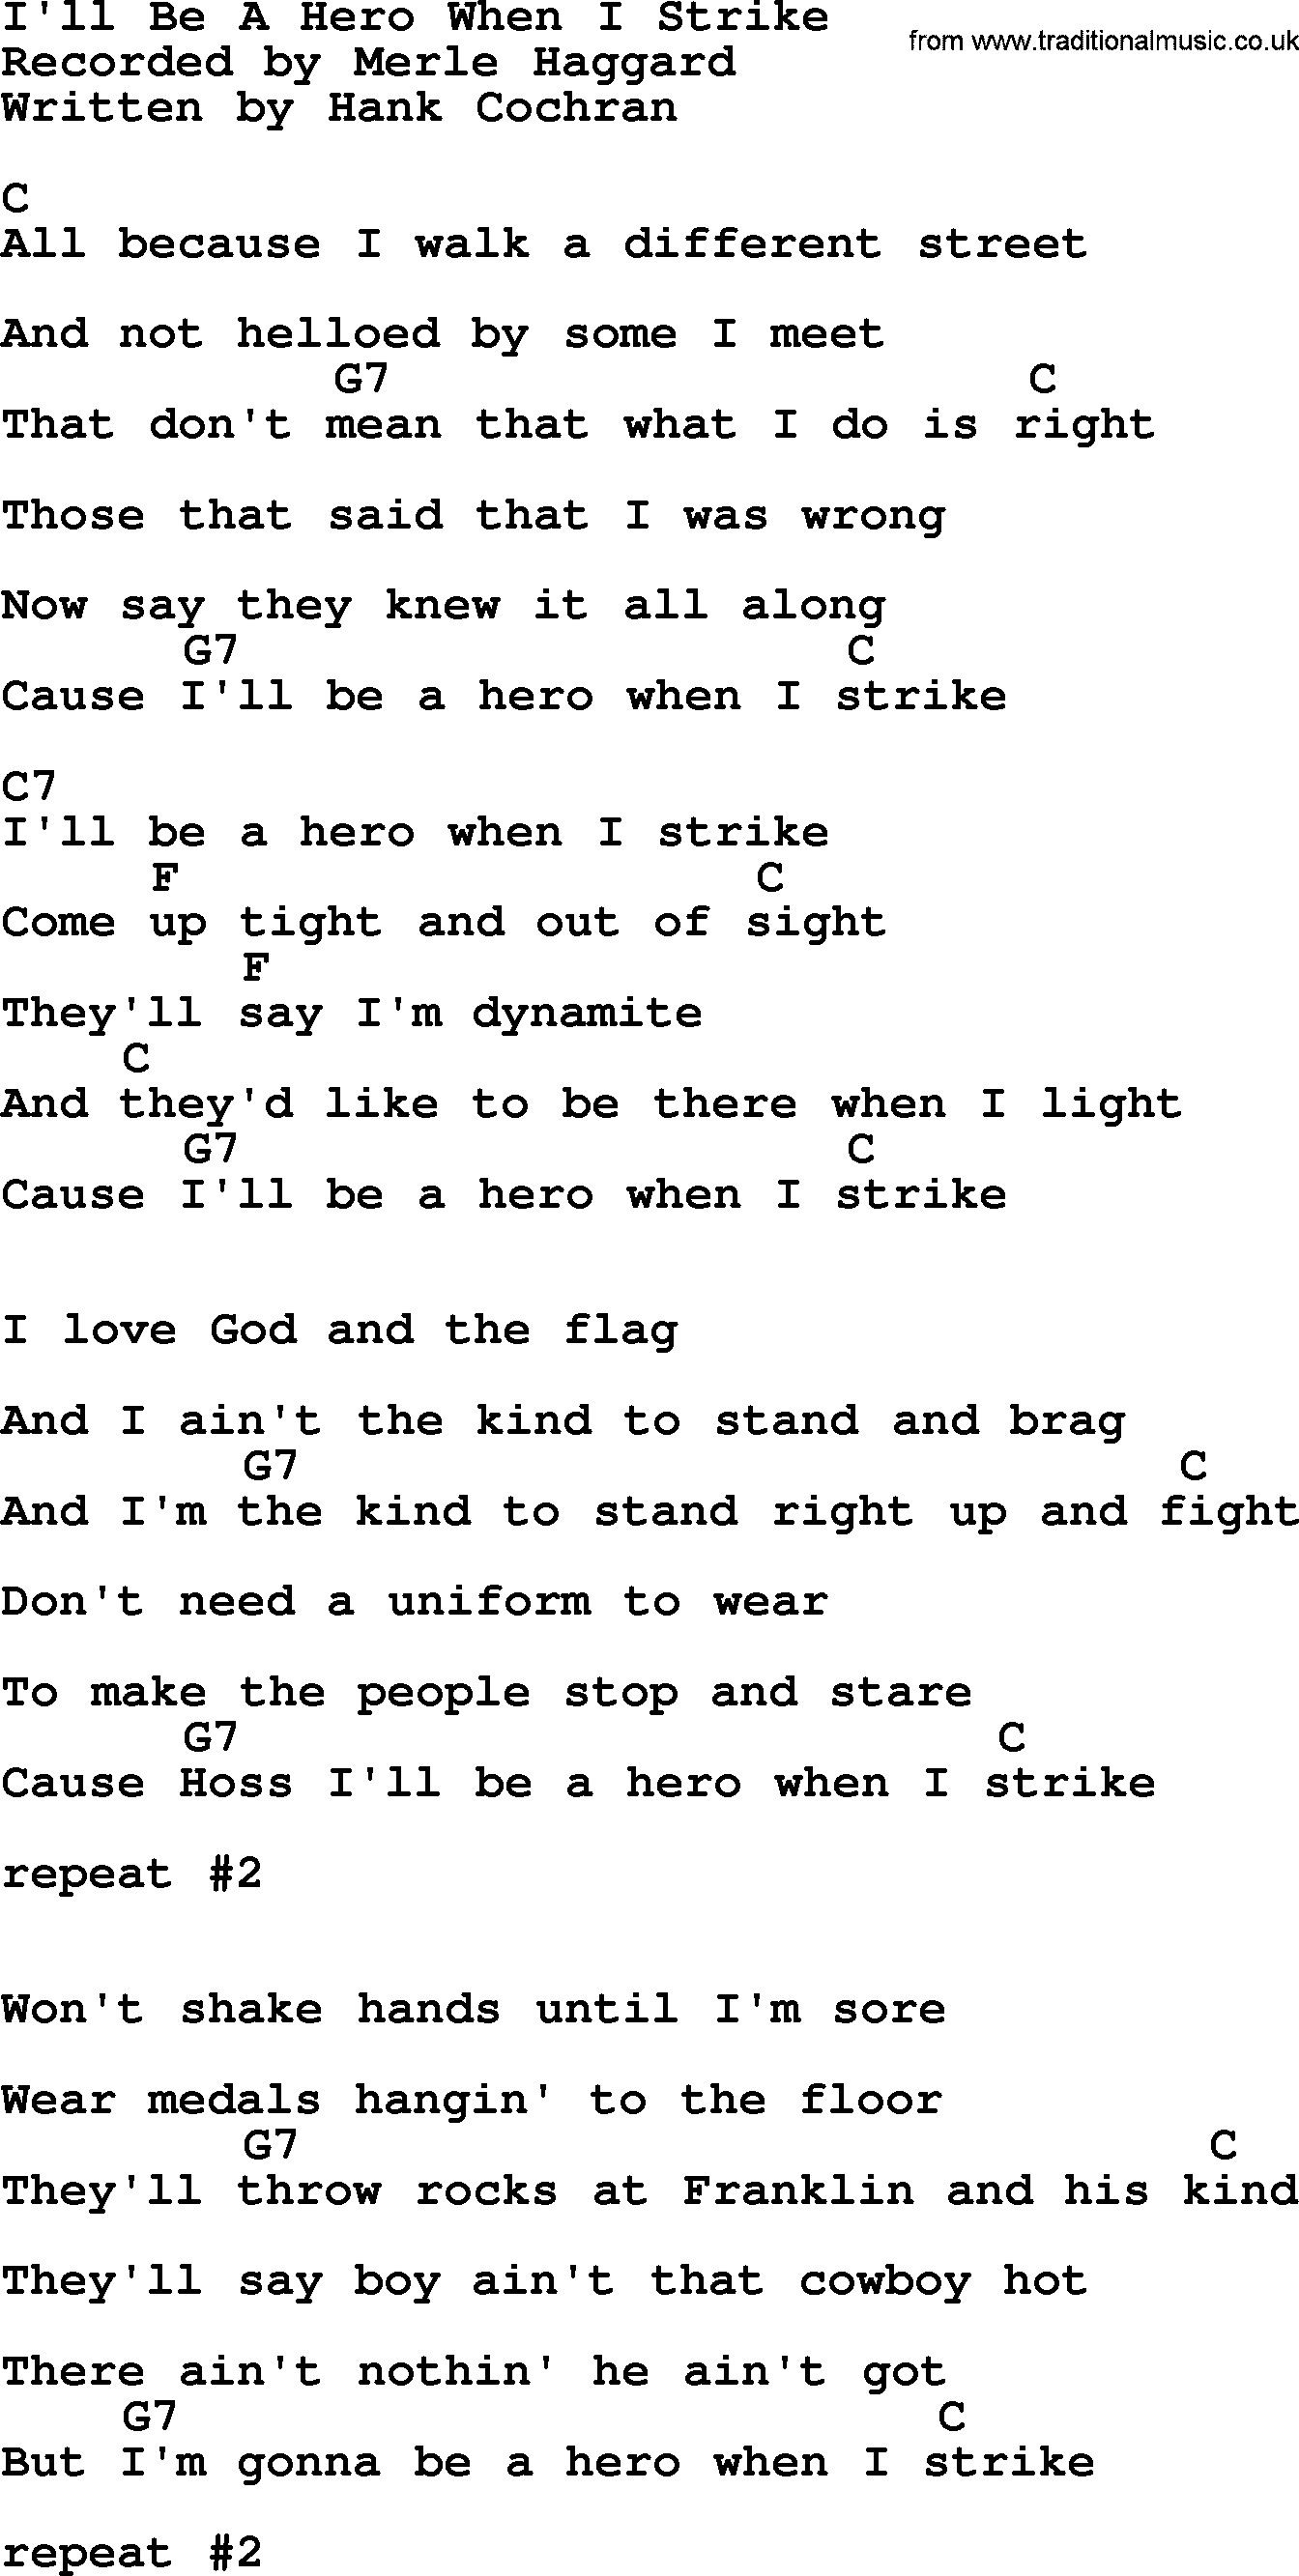 Merle Haggard song: I'll Be A Hero When I Strike, lyrics and chords